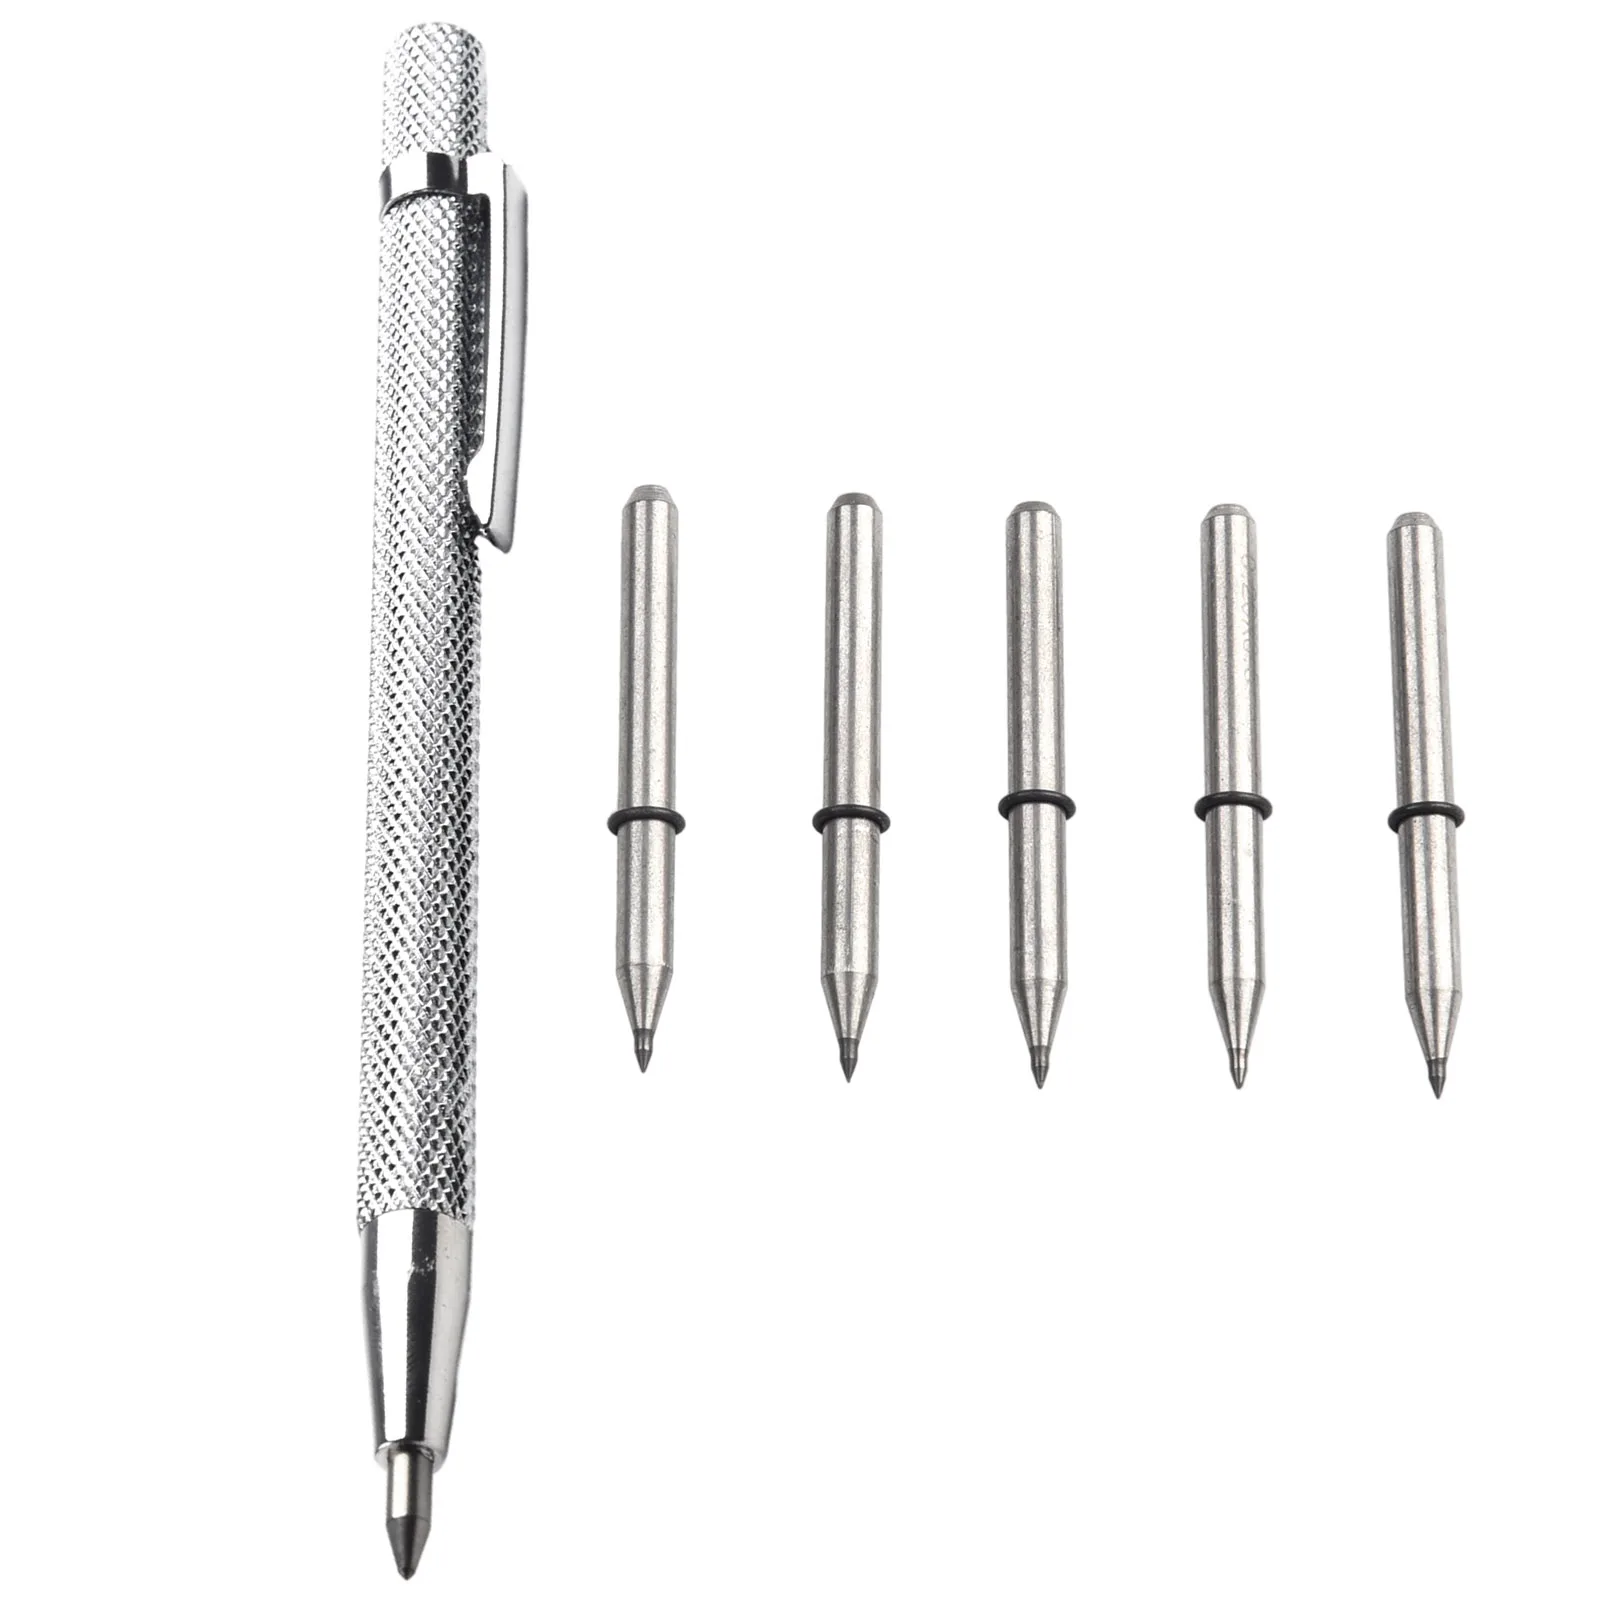 

6Pcs Tungsten Carbide Tip Scriber Engraving Pen Marking Tip Metal Tile Cutting Pen For Glass Ceramic Carving Lettering Hand Tool